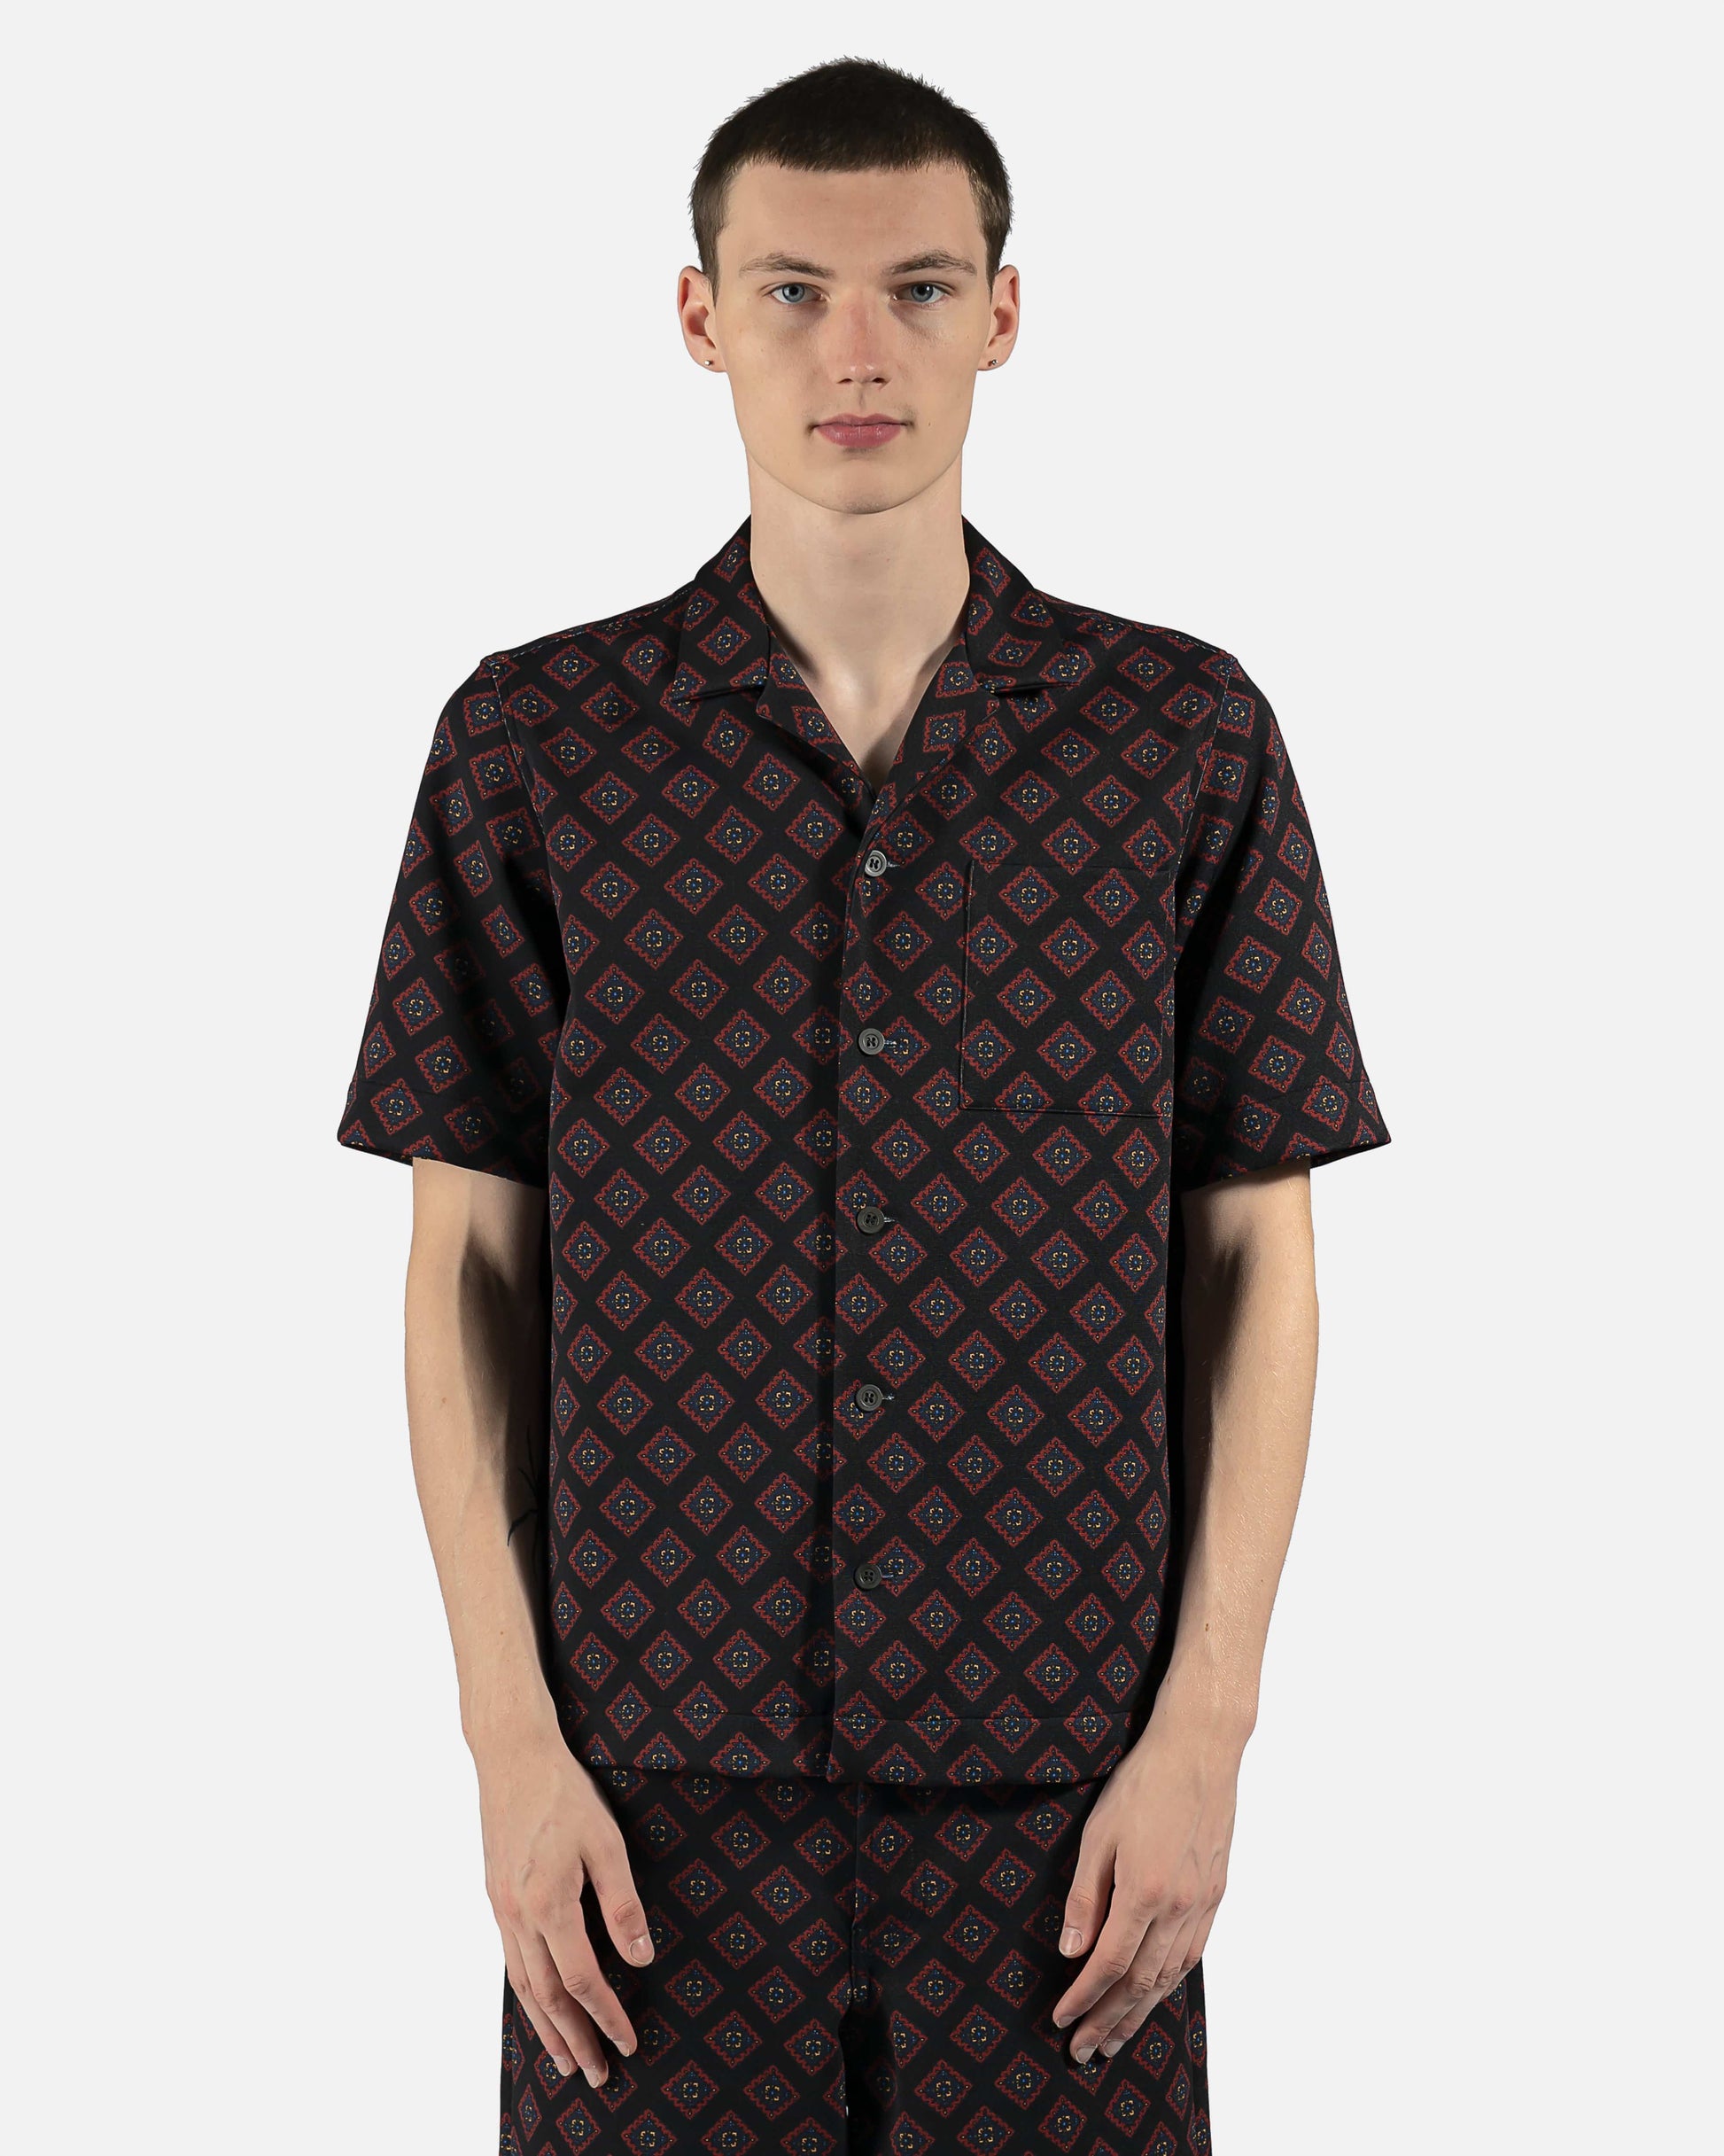 Dries Van Noten Men's Shirts Carltone Button-Up Shirt in Black